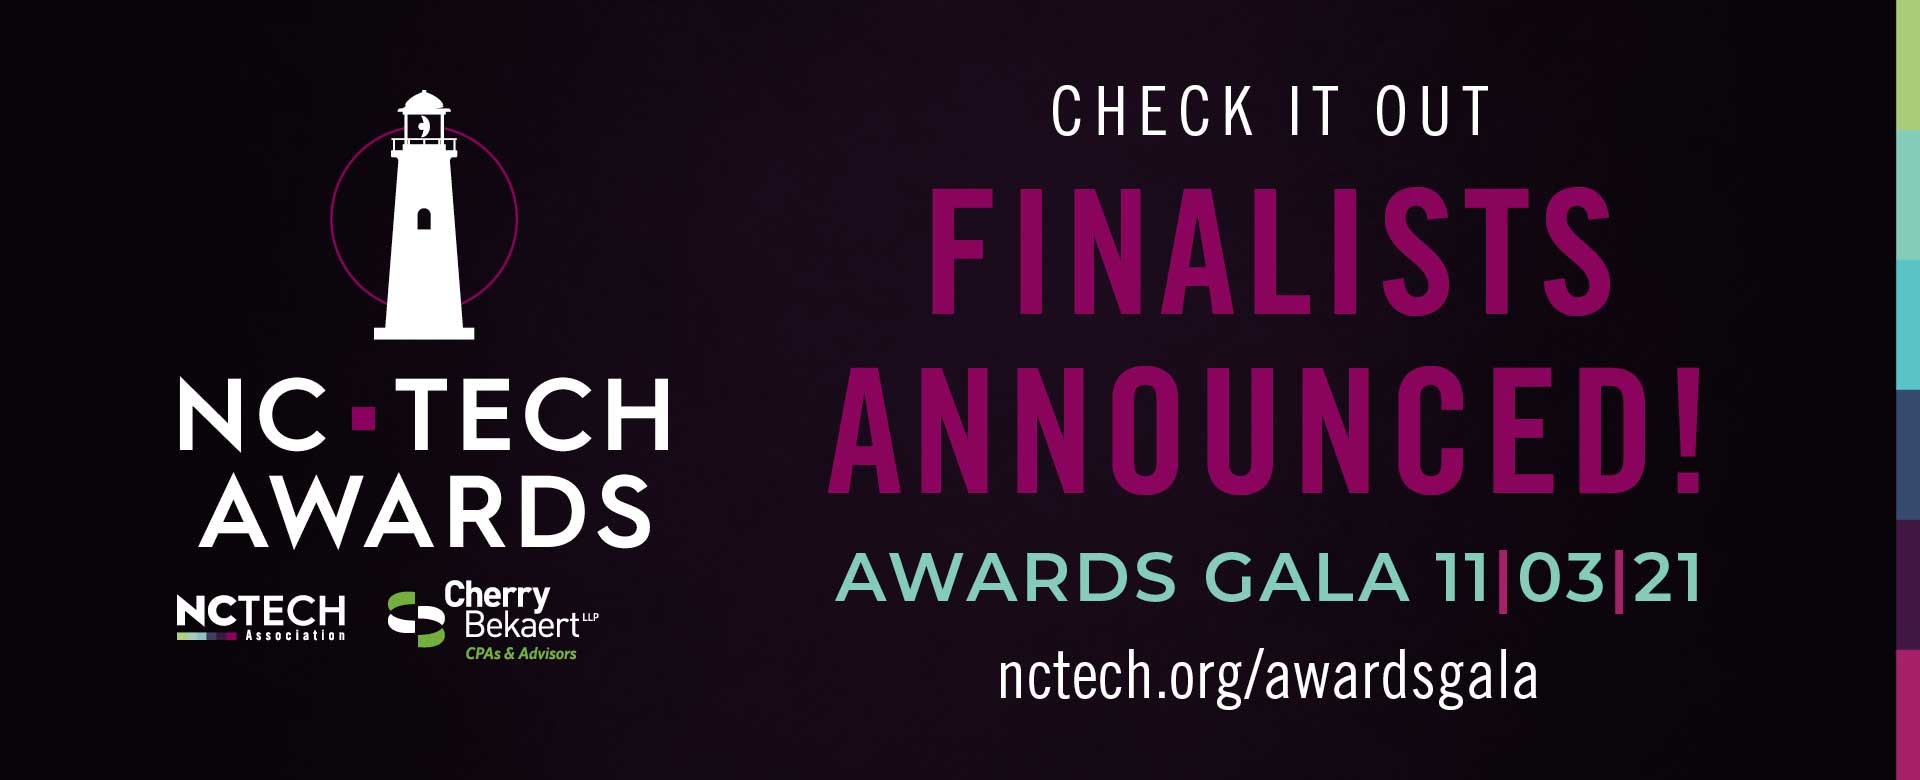 2021 NC TECH Awards Finalists Announced1.